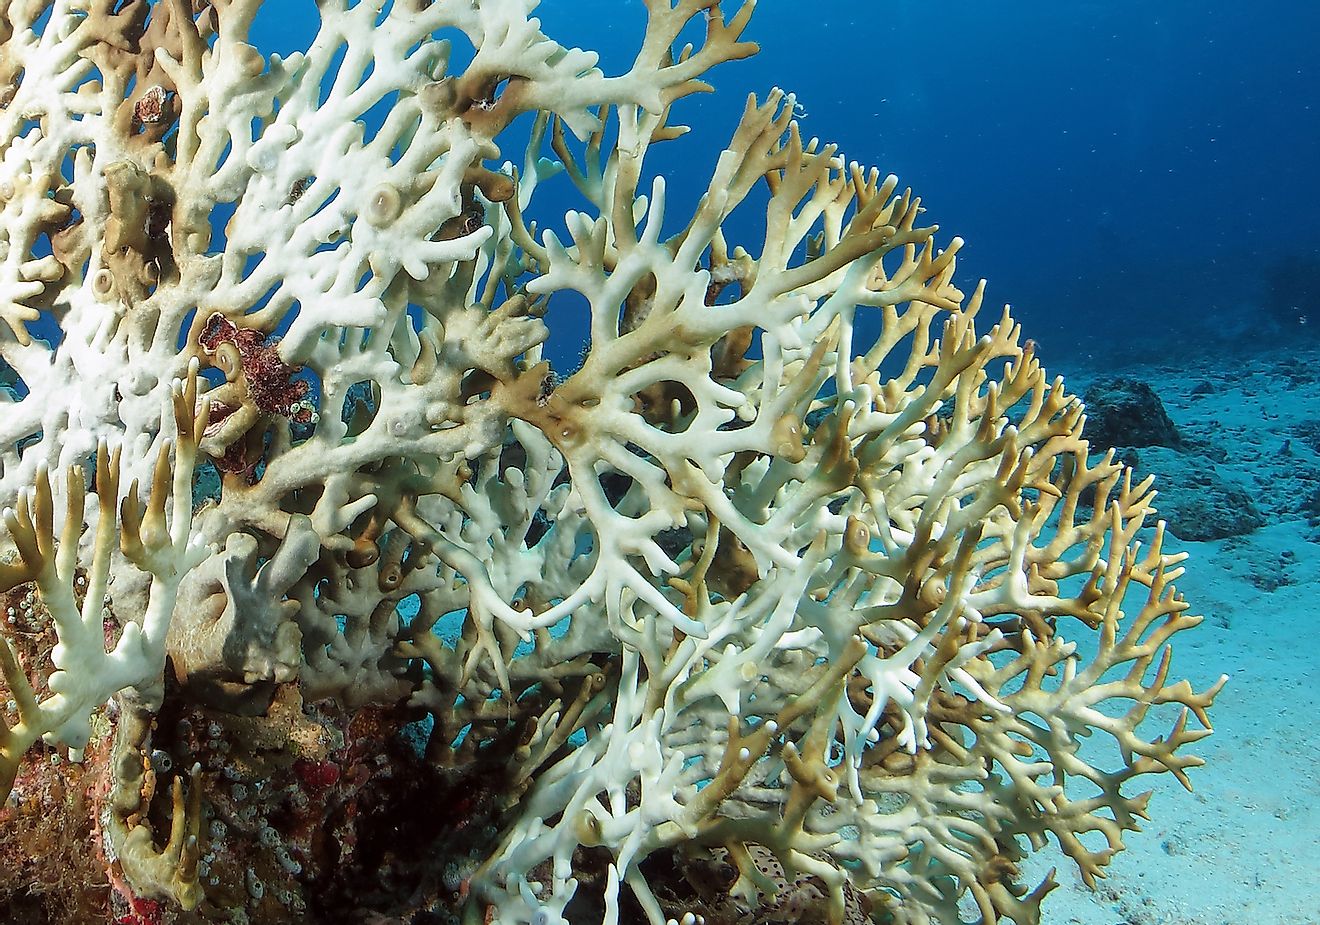 Coral Bleaching under water Okinawa, Japan. Image credit: Buttchi 3 Sha Life/Shutterstock.com